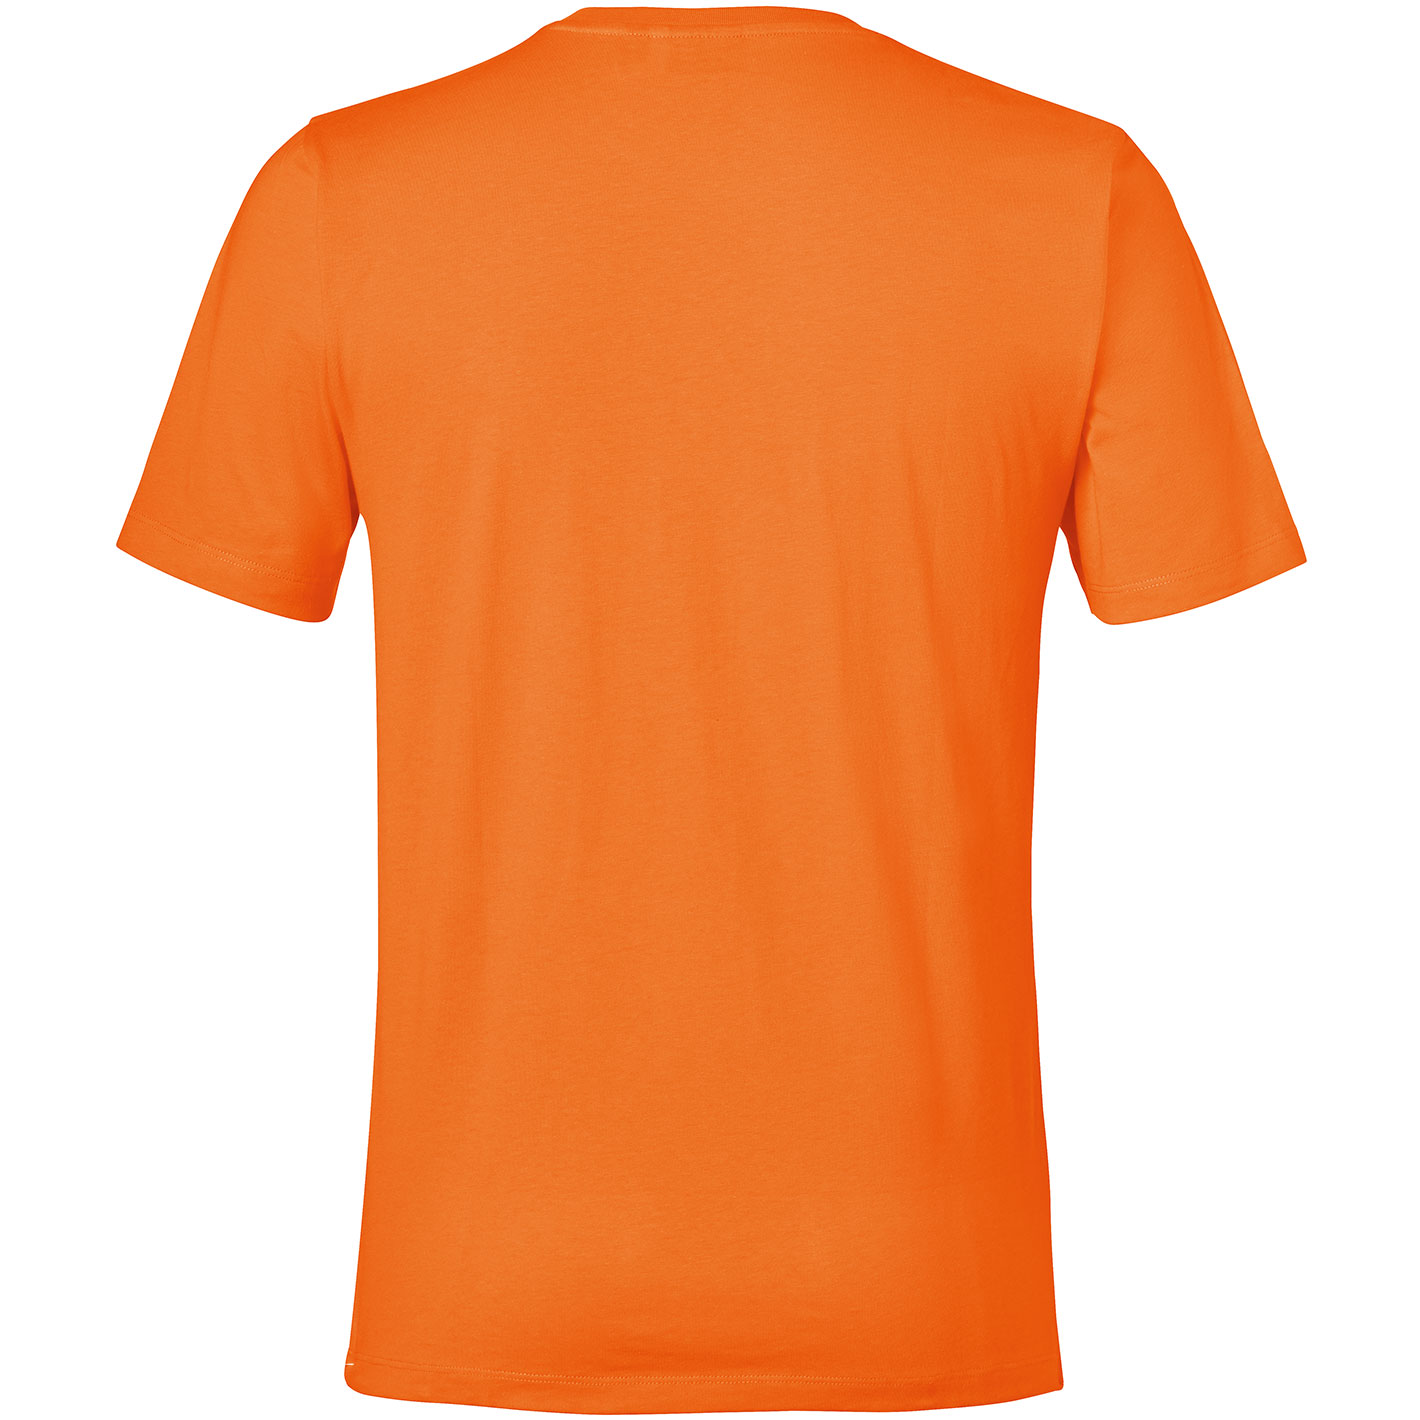 T-shirt orange "STIHL"